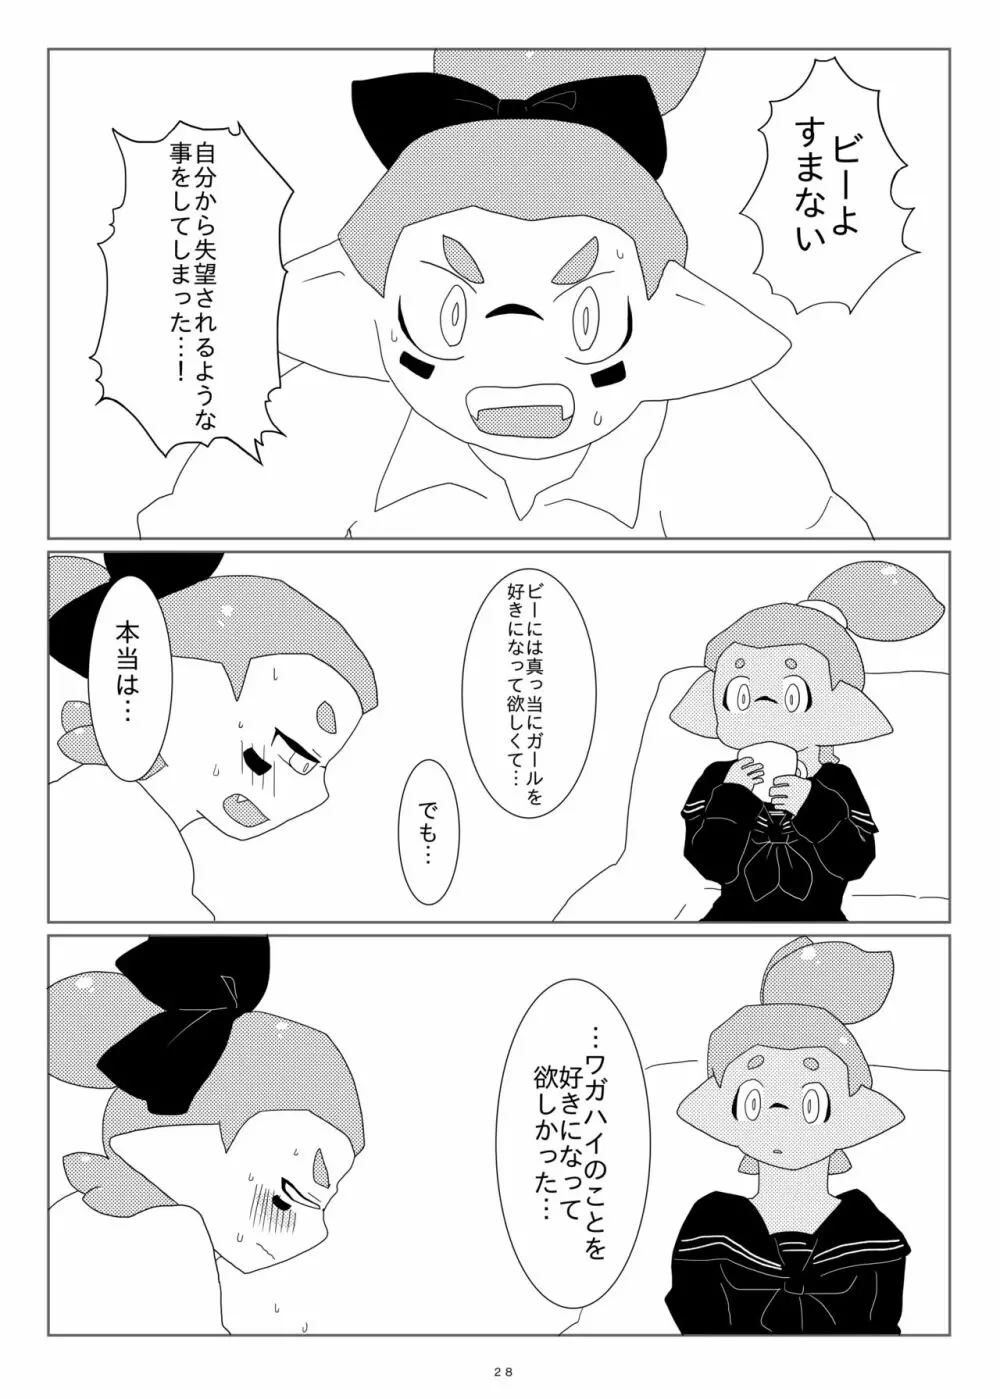 墜落予定 - page27